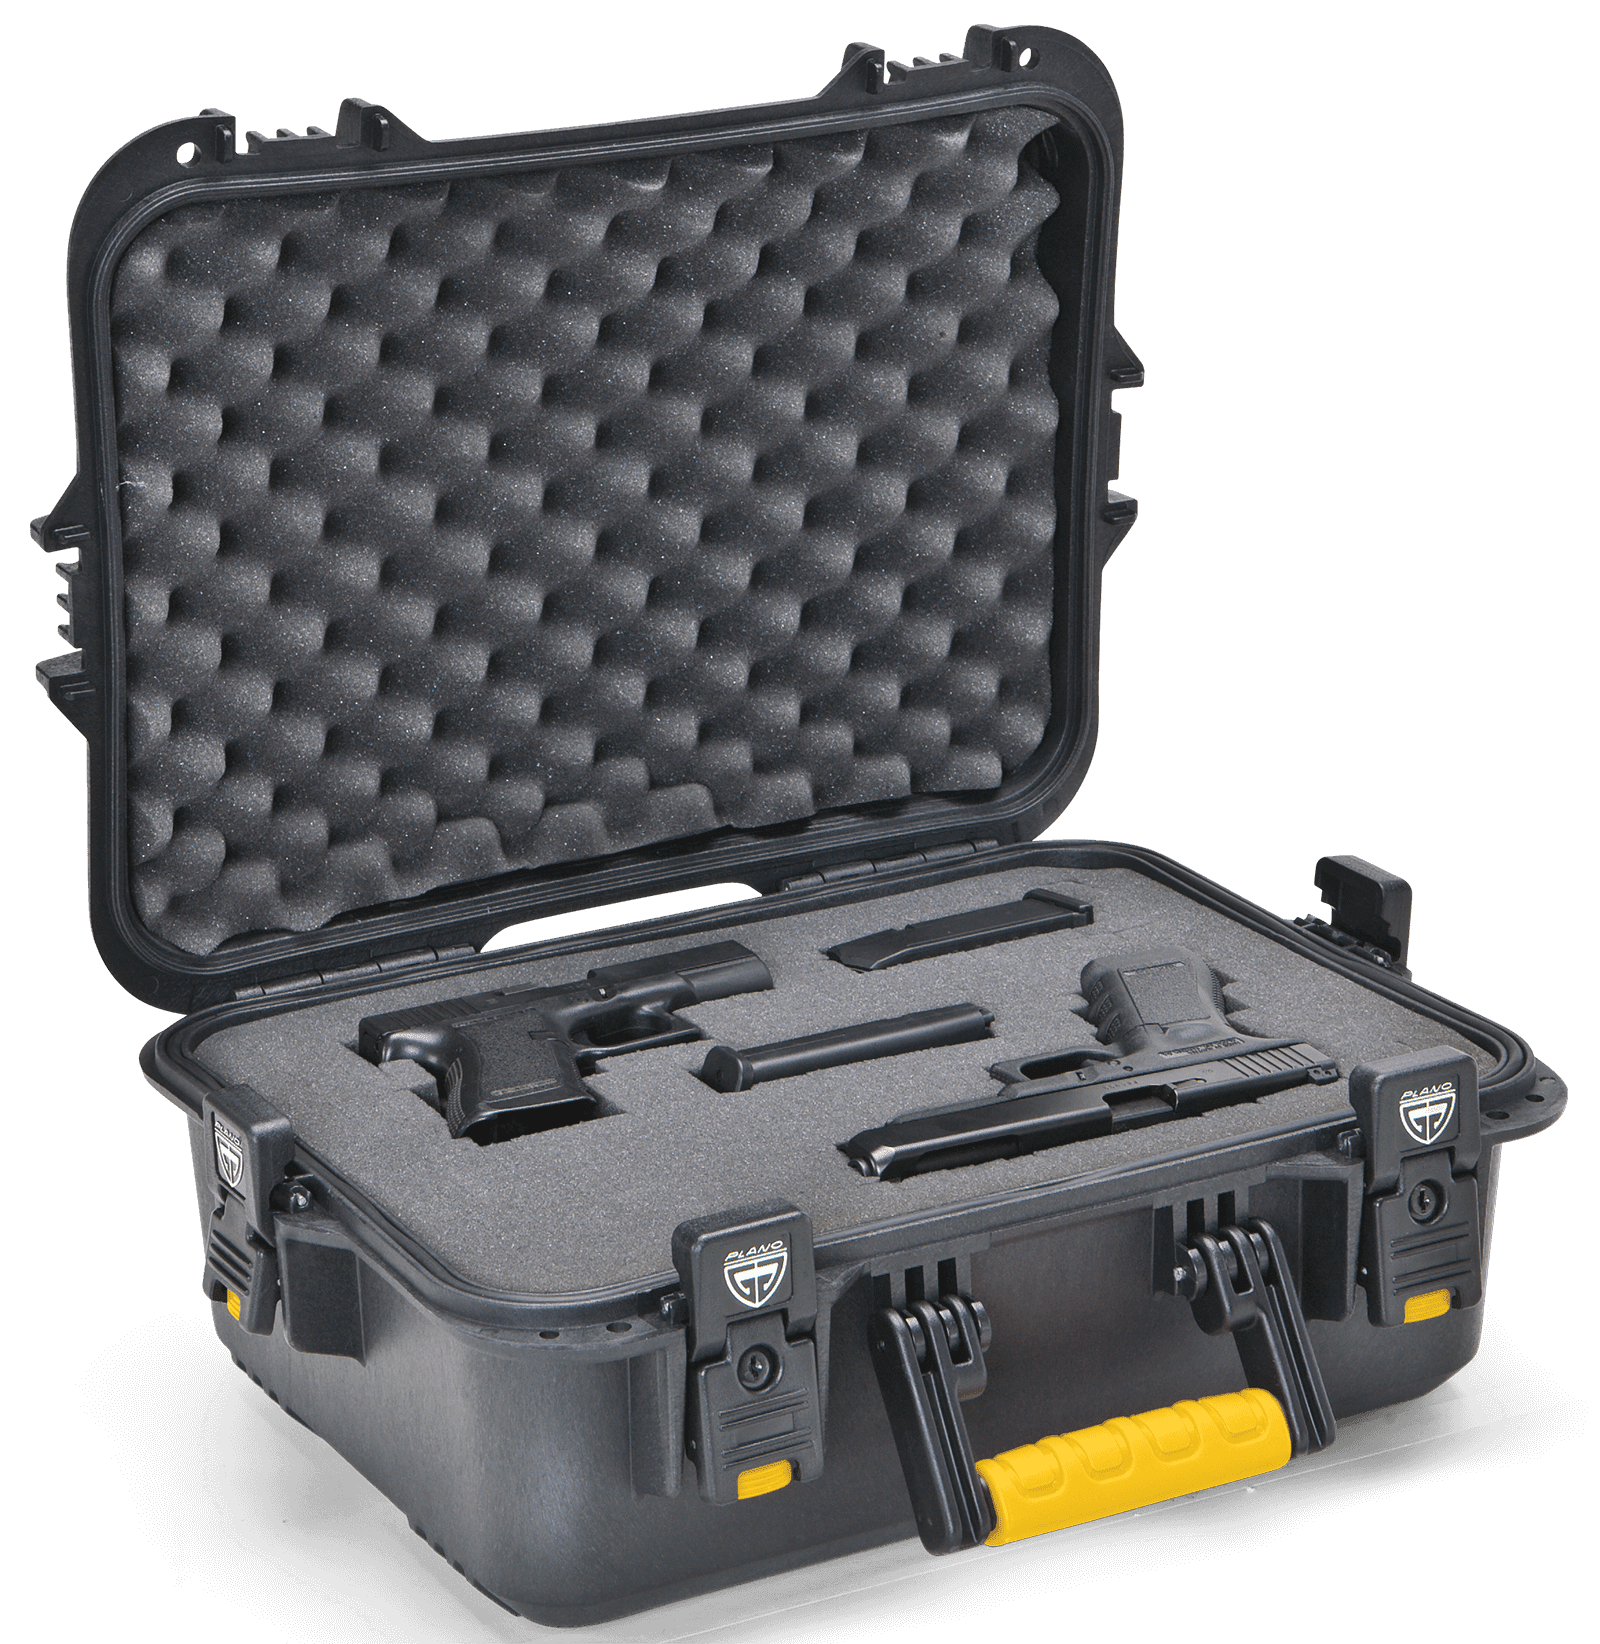 All Weather Case - XL, Pistol/Accessories Case, Black/Yellow 